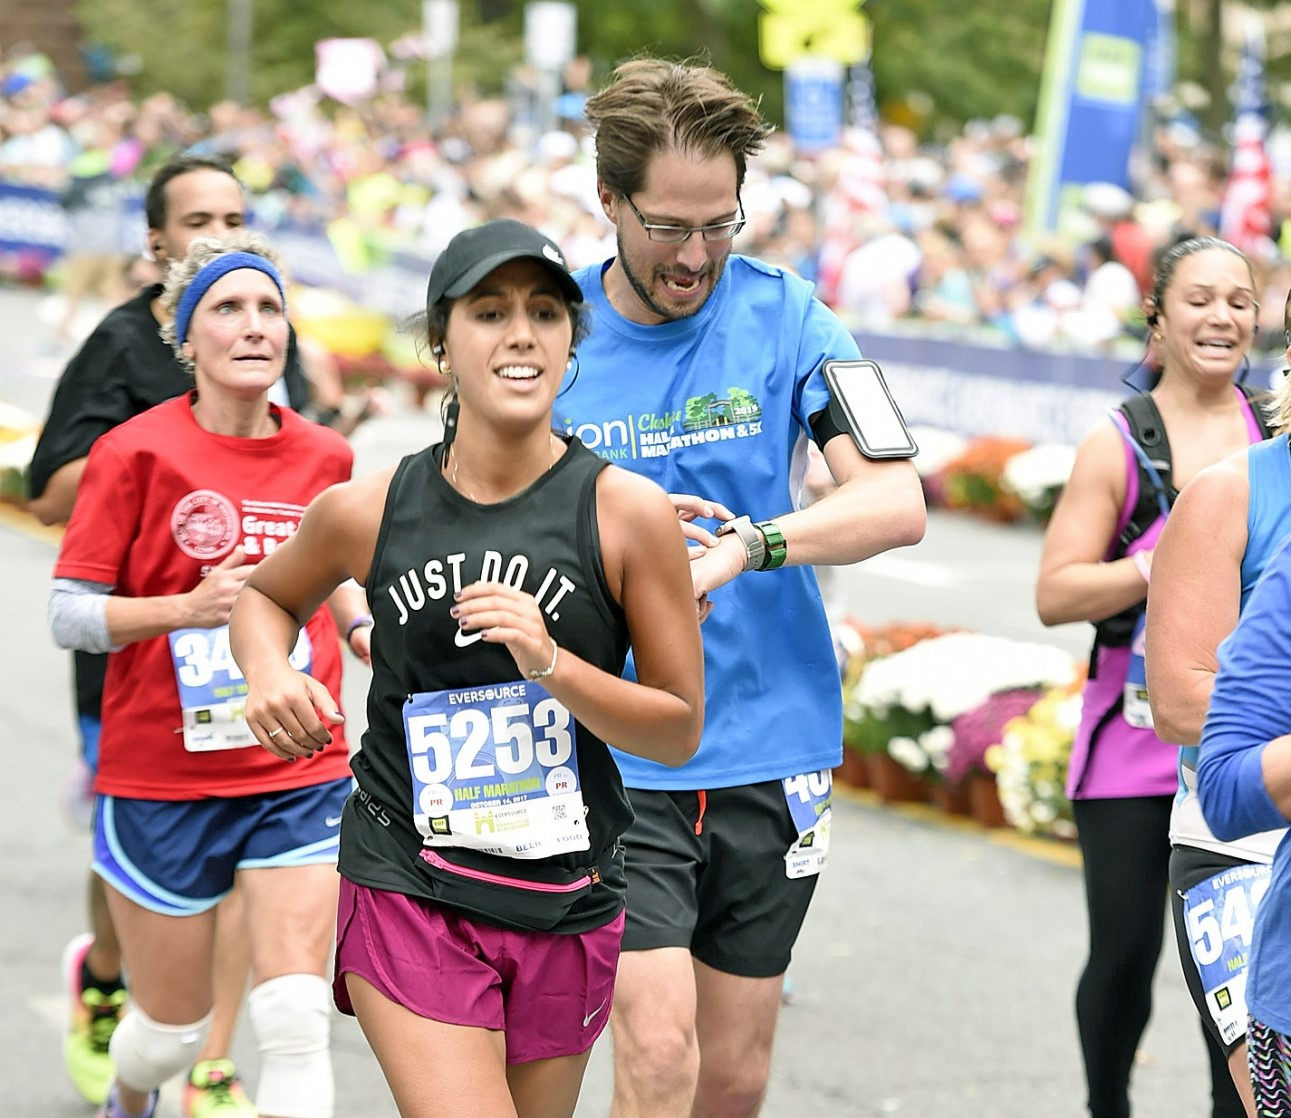 A woman running in a marathon